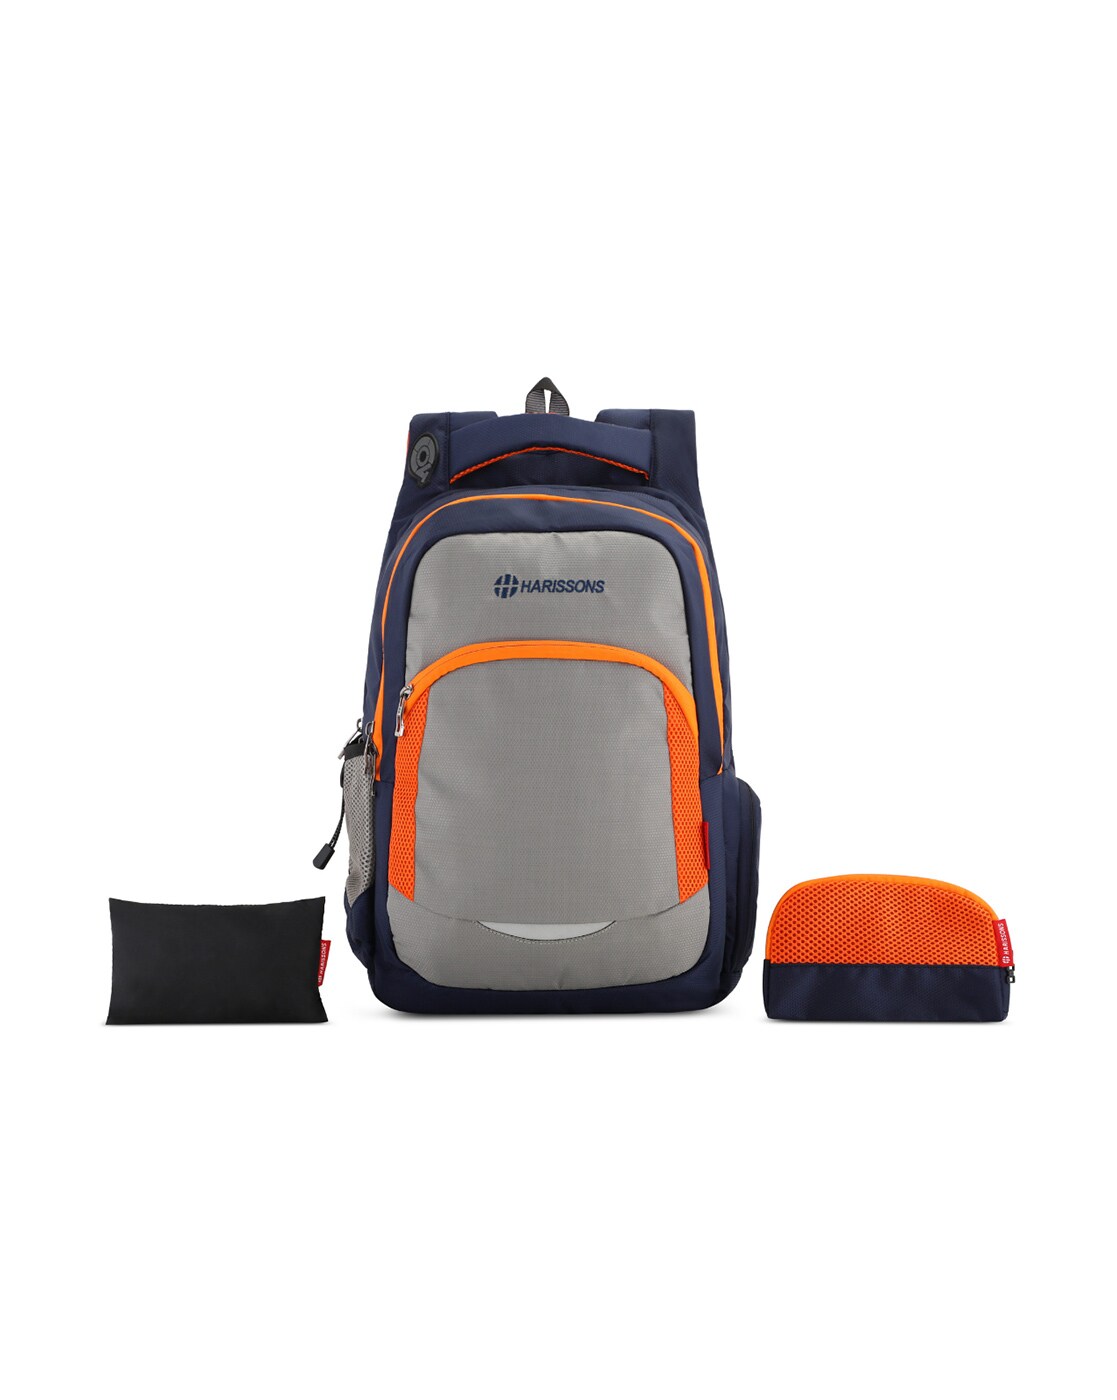 HARISSONS Stud 2015 34 L Laptop Backpack Grey - Price in India |  Flipkart.com